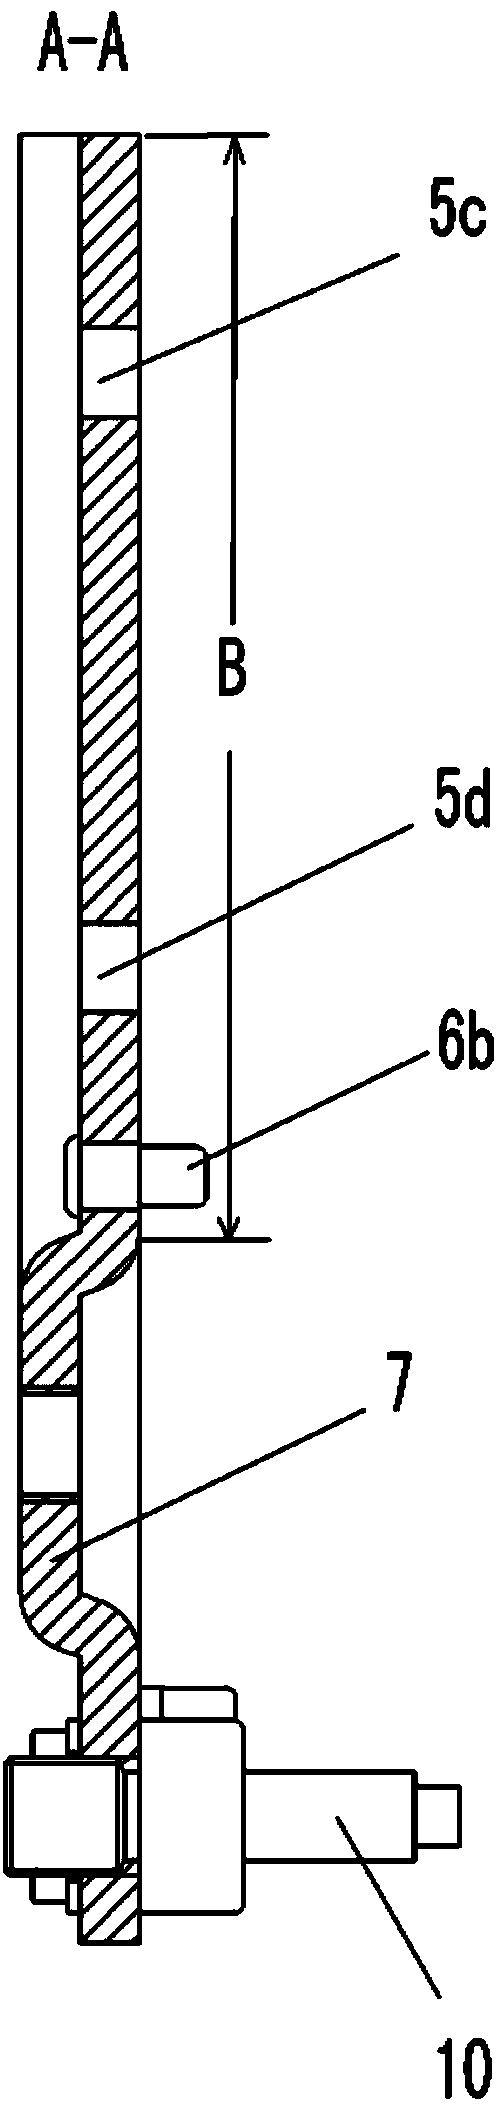 Multifunctional refrigerator lower hinge device